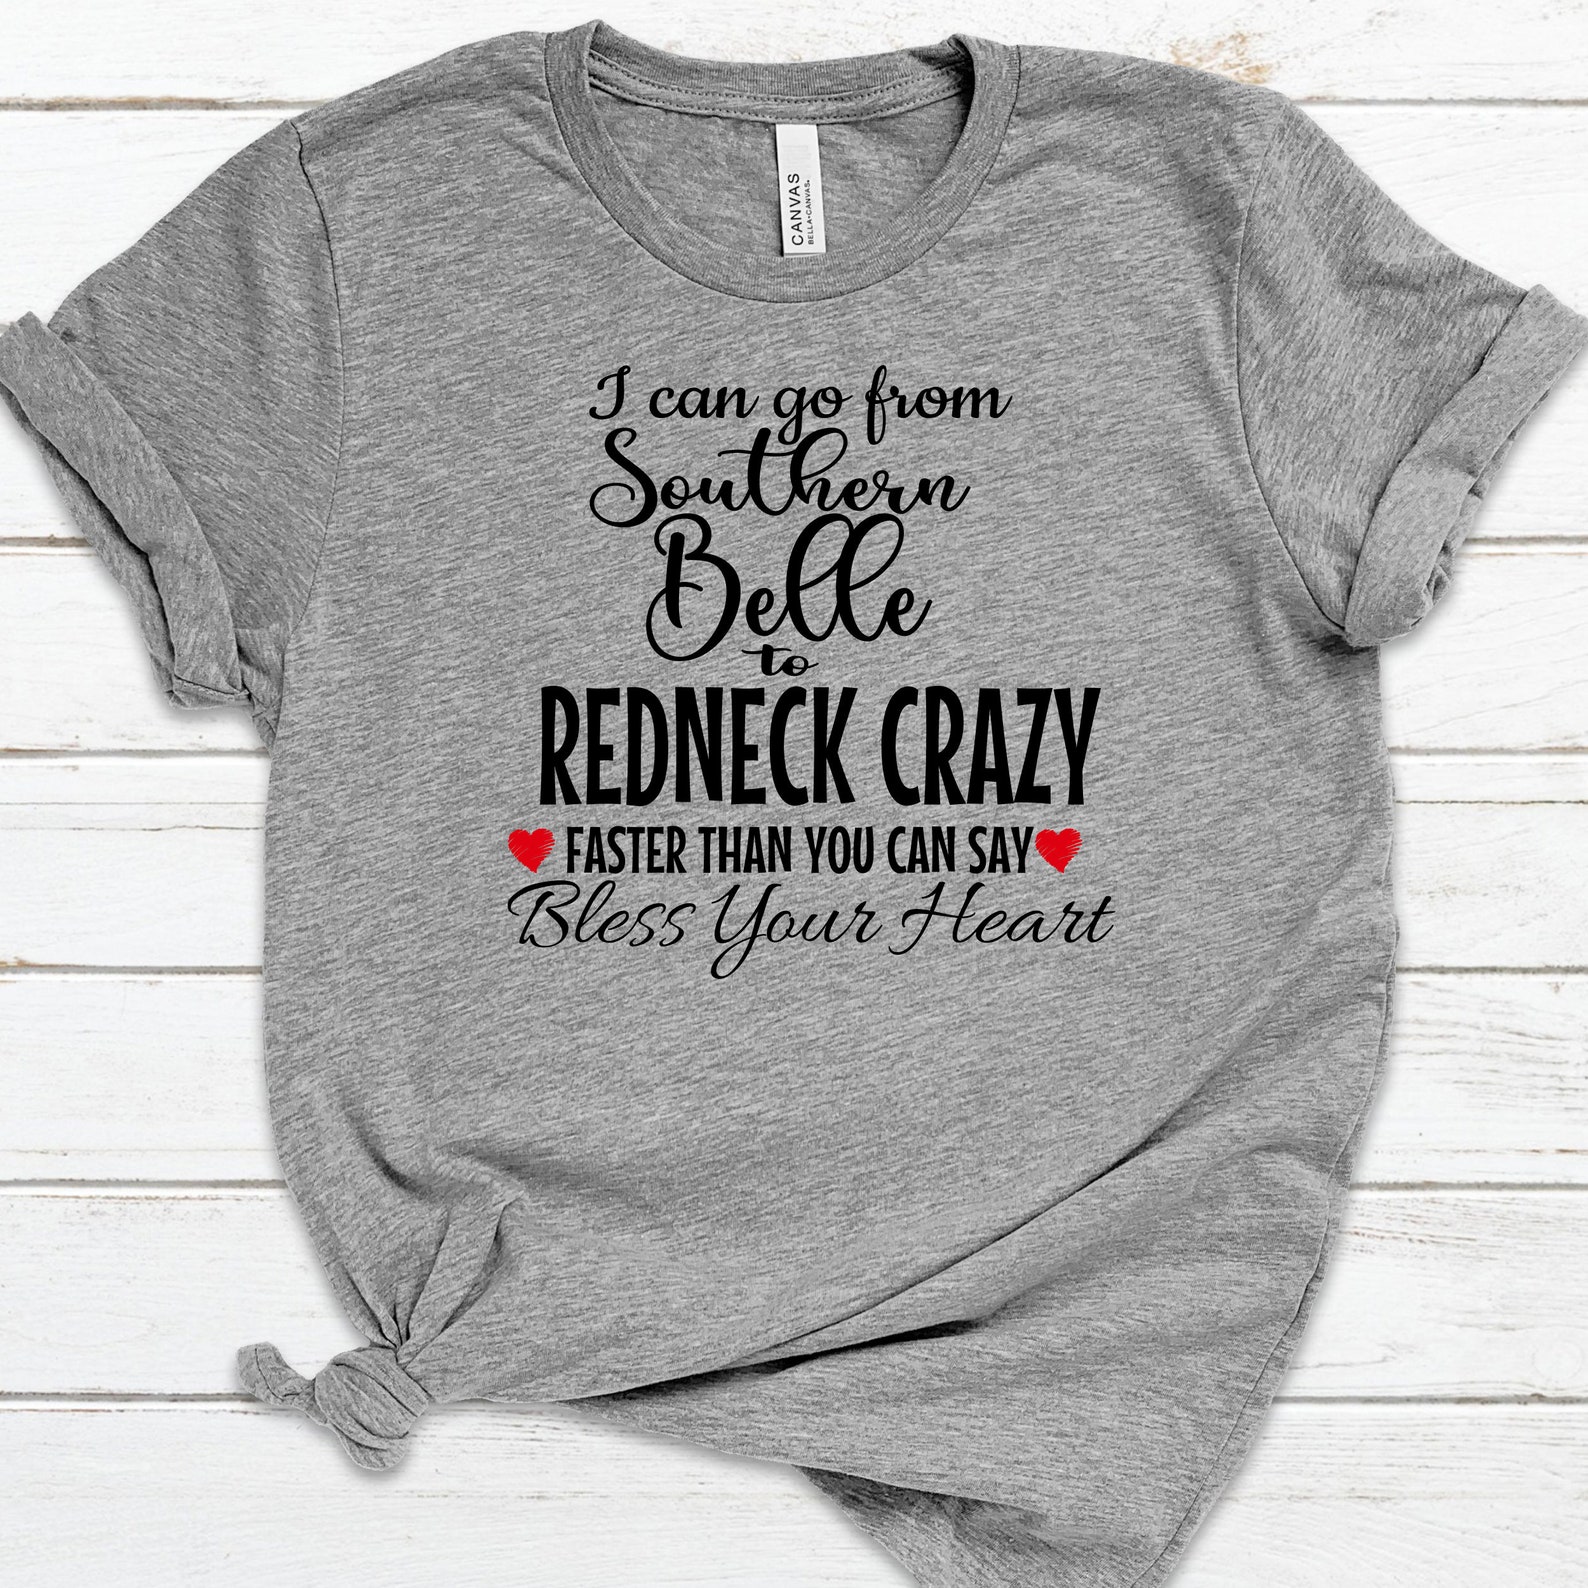 Southern Belle-Redneck Crazy T-Shirt-Women's | Etsy